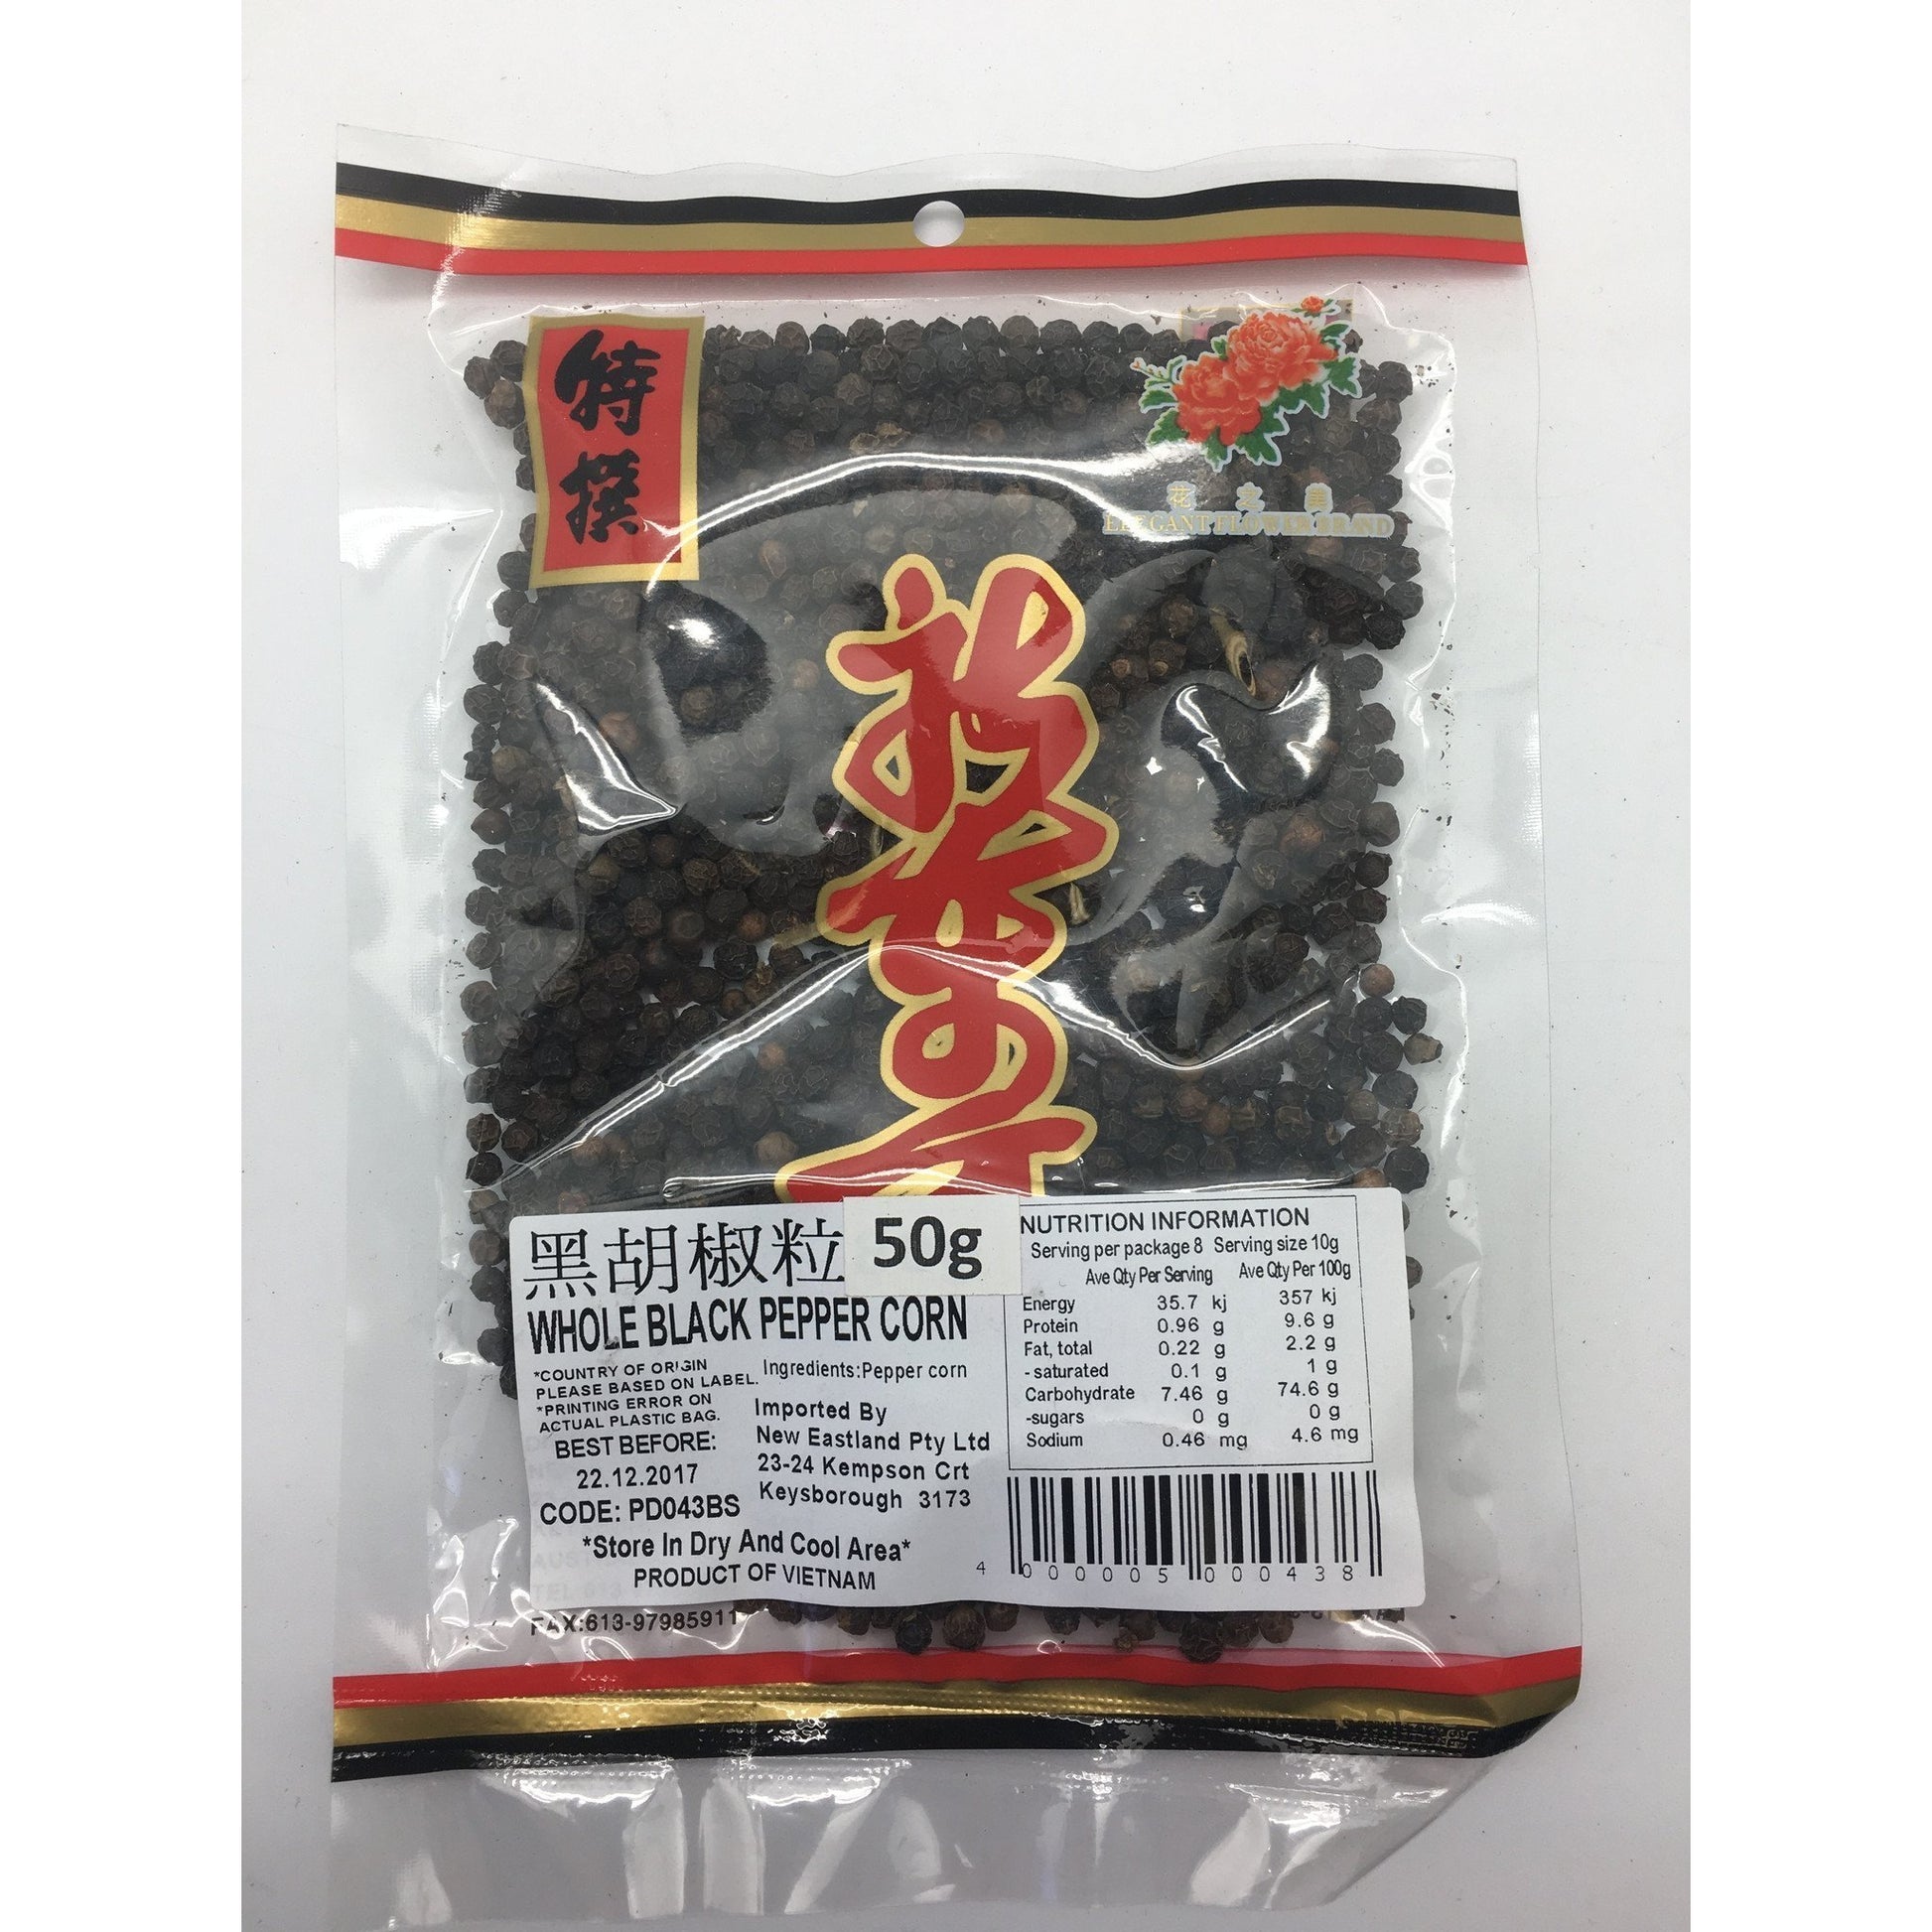 PD043BS New Eastland Pty Ltd - Whole Black Pepper Corn 50g - 10 packets / 1 bag - New Eastland Pty Ltd - Asian food wholesalers